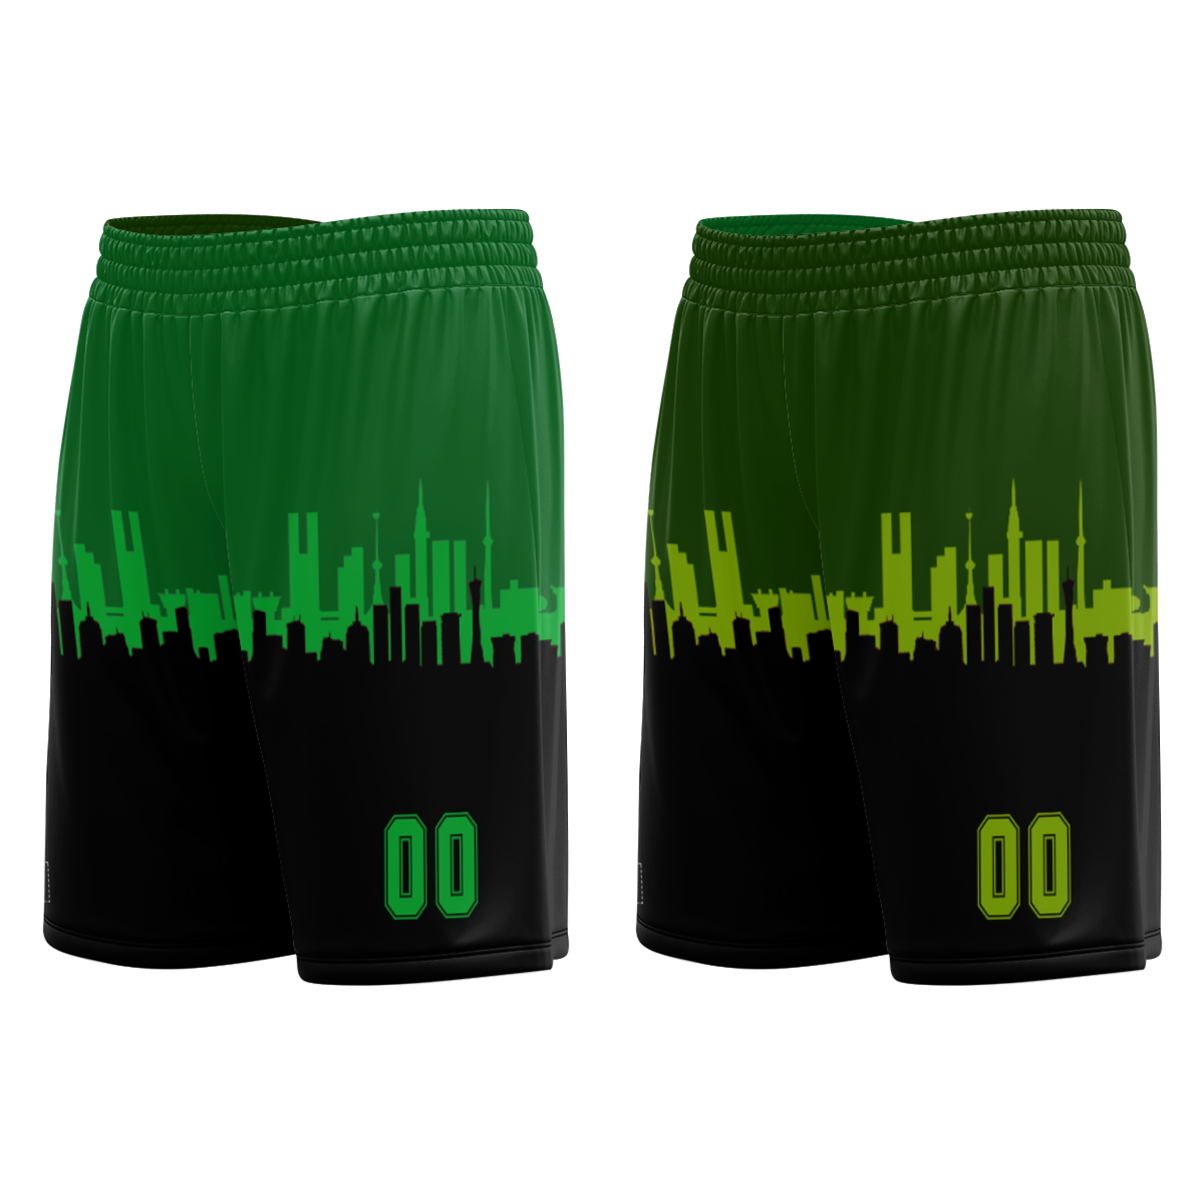 wholesale-custom-breathable-sublimation-printing-reversible-blank-design-uniform-unisex-basketball-jersey-at-cj-pod-8